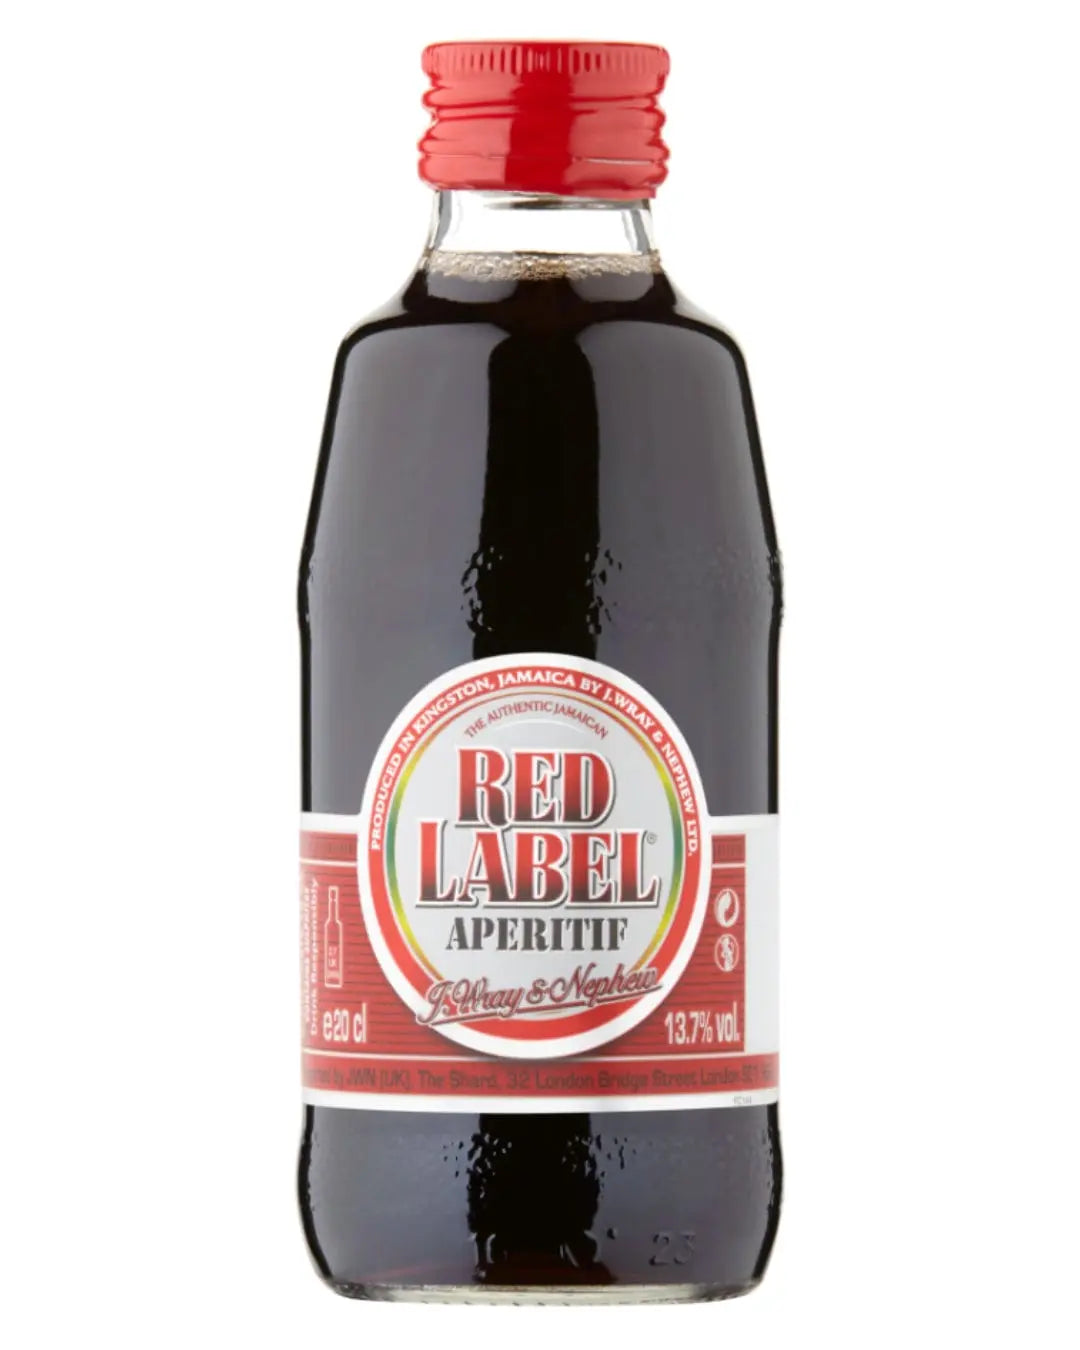 Red Label Jamaican Aperitif, 20 cl spirits